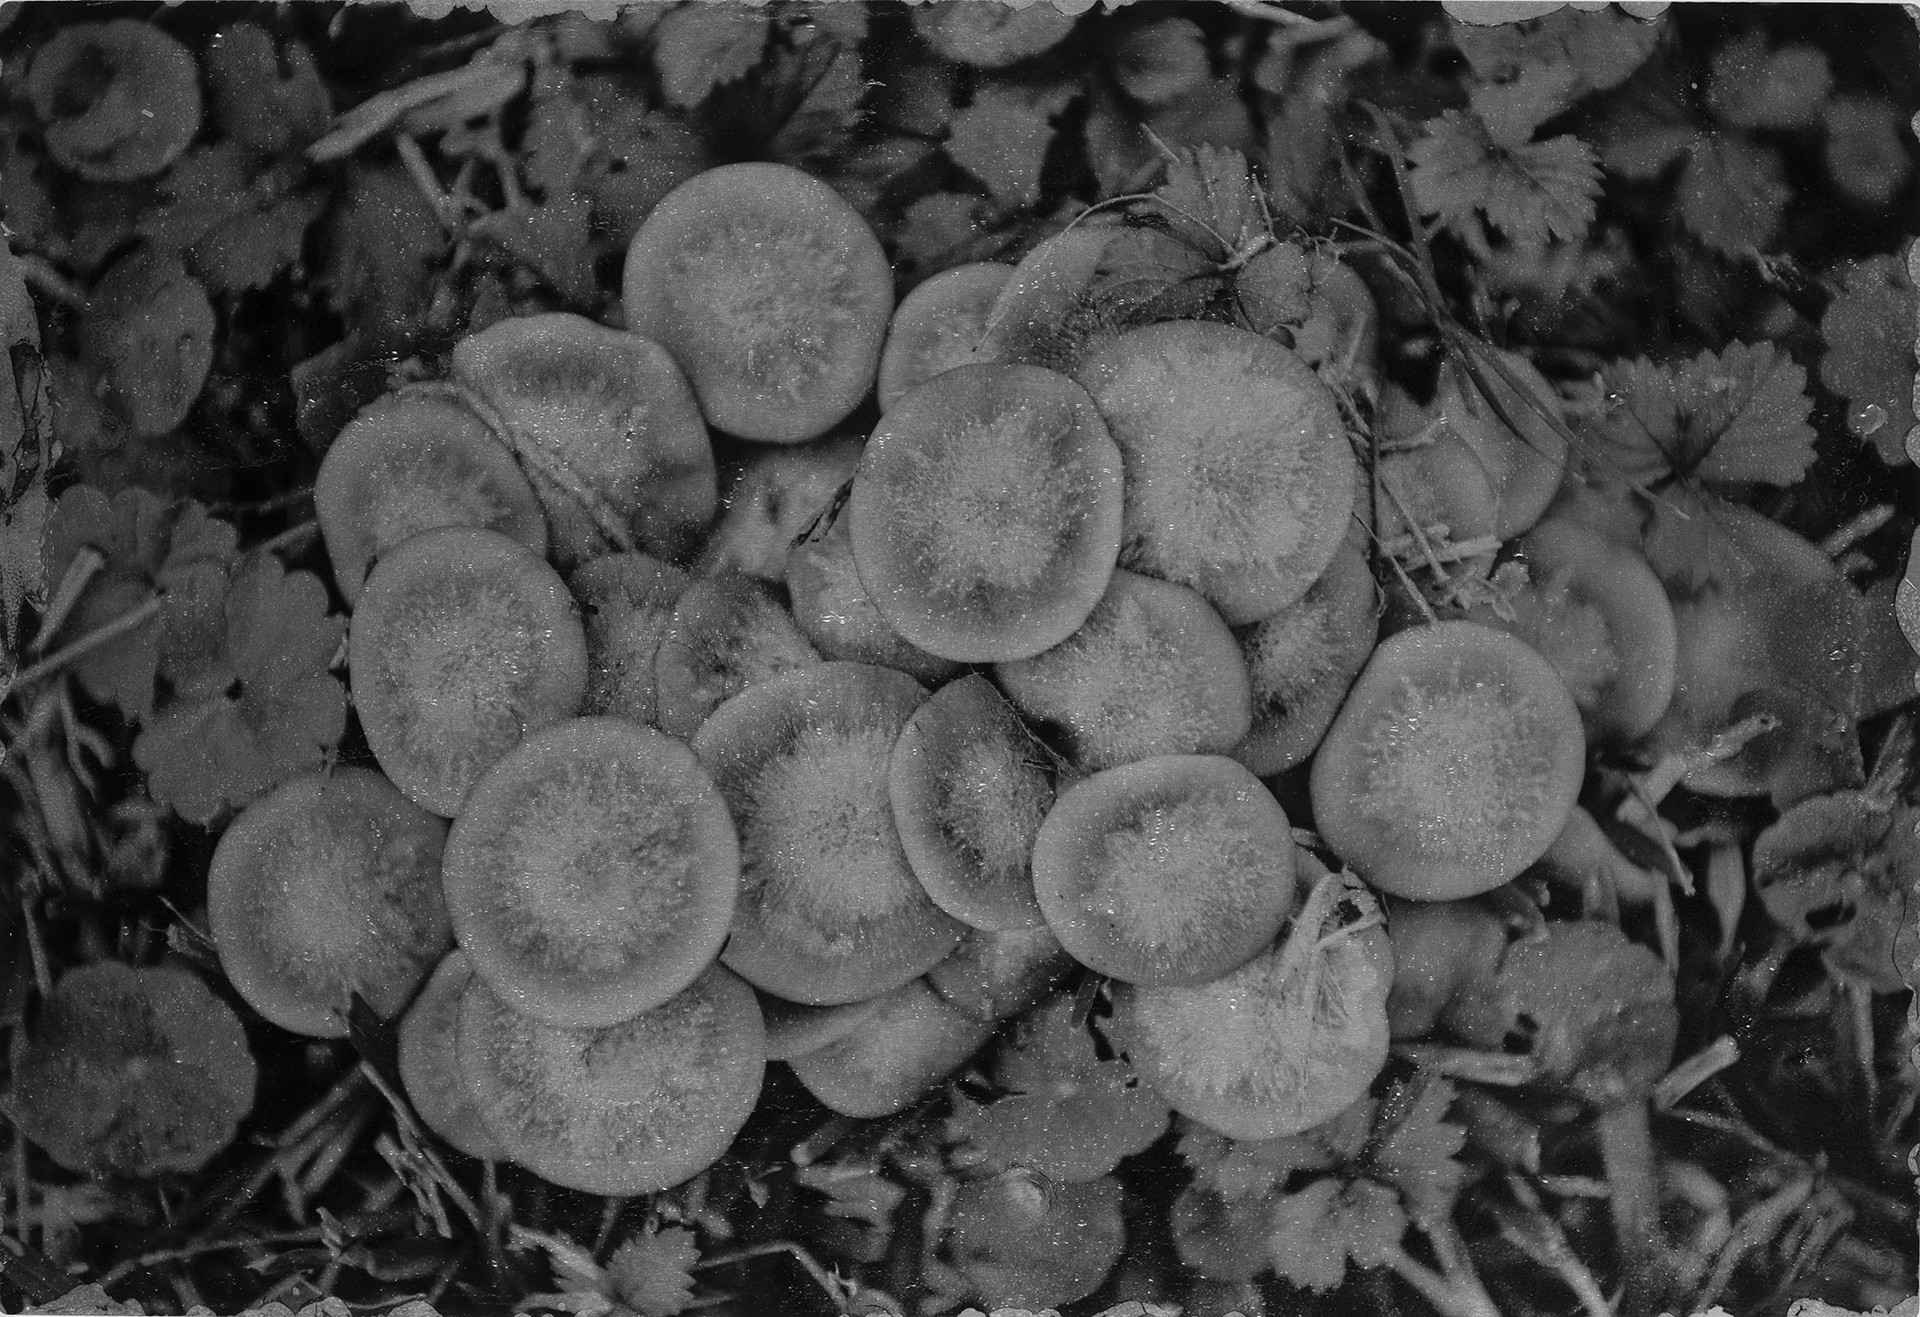 Mushrooms by David Humphreys